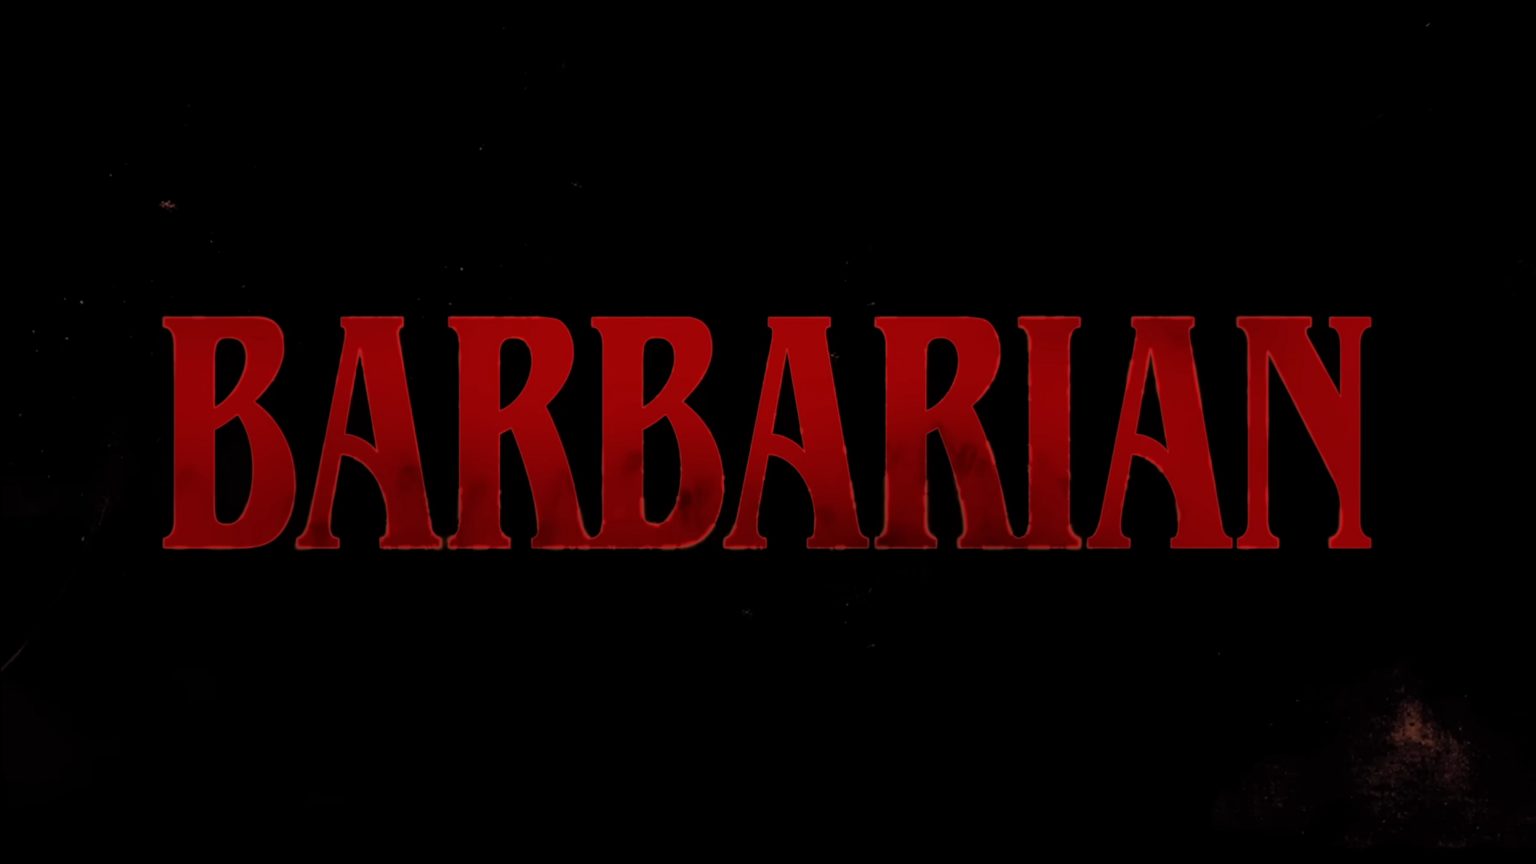 barbarian movie review ebert